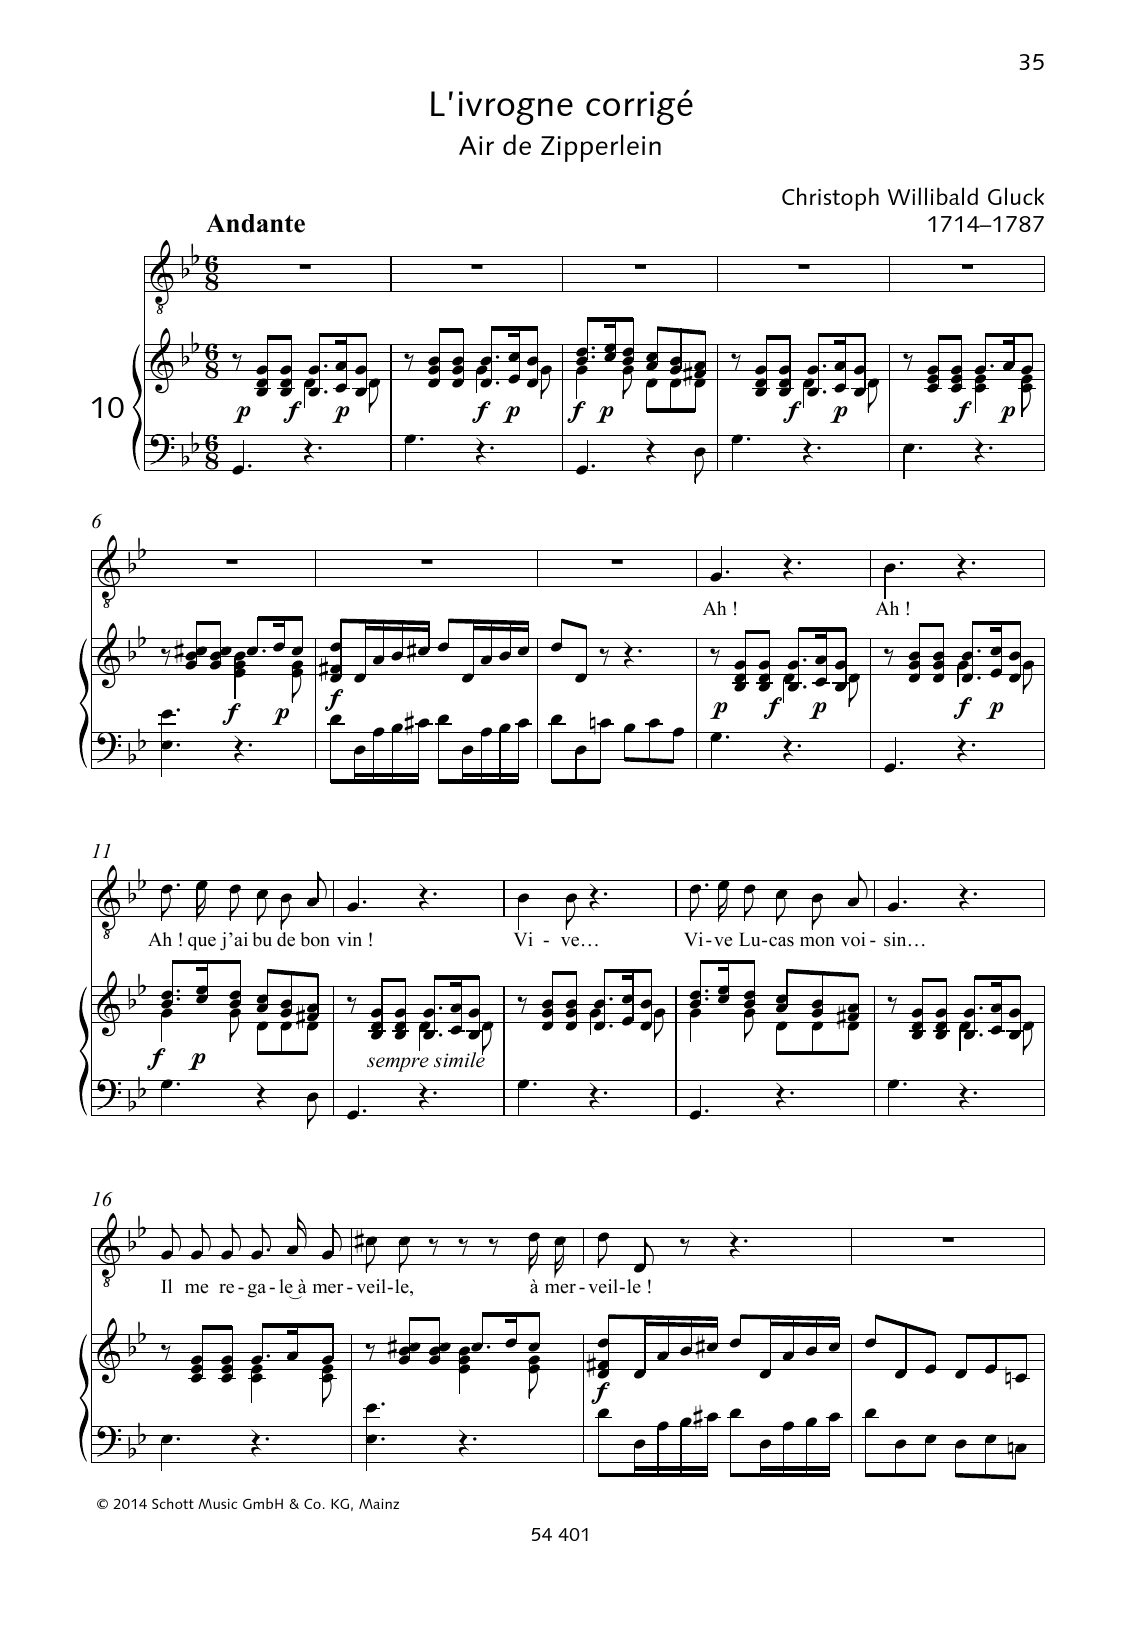 Christoph Willibald Gluck Ah! Que j'ai bu de bon vin! sheet music notes and chords arranged for Piano & Vocal